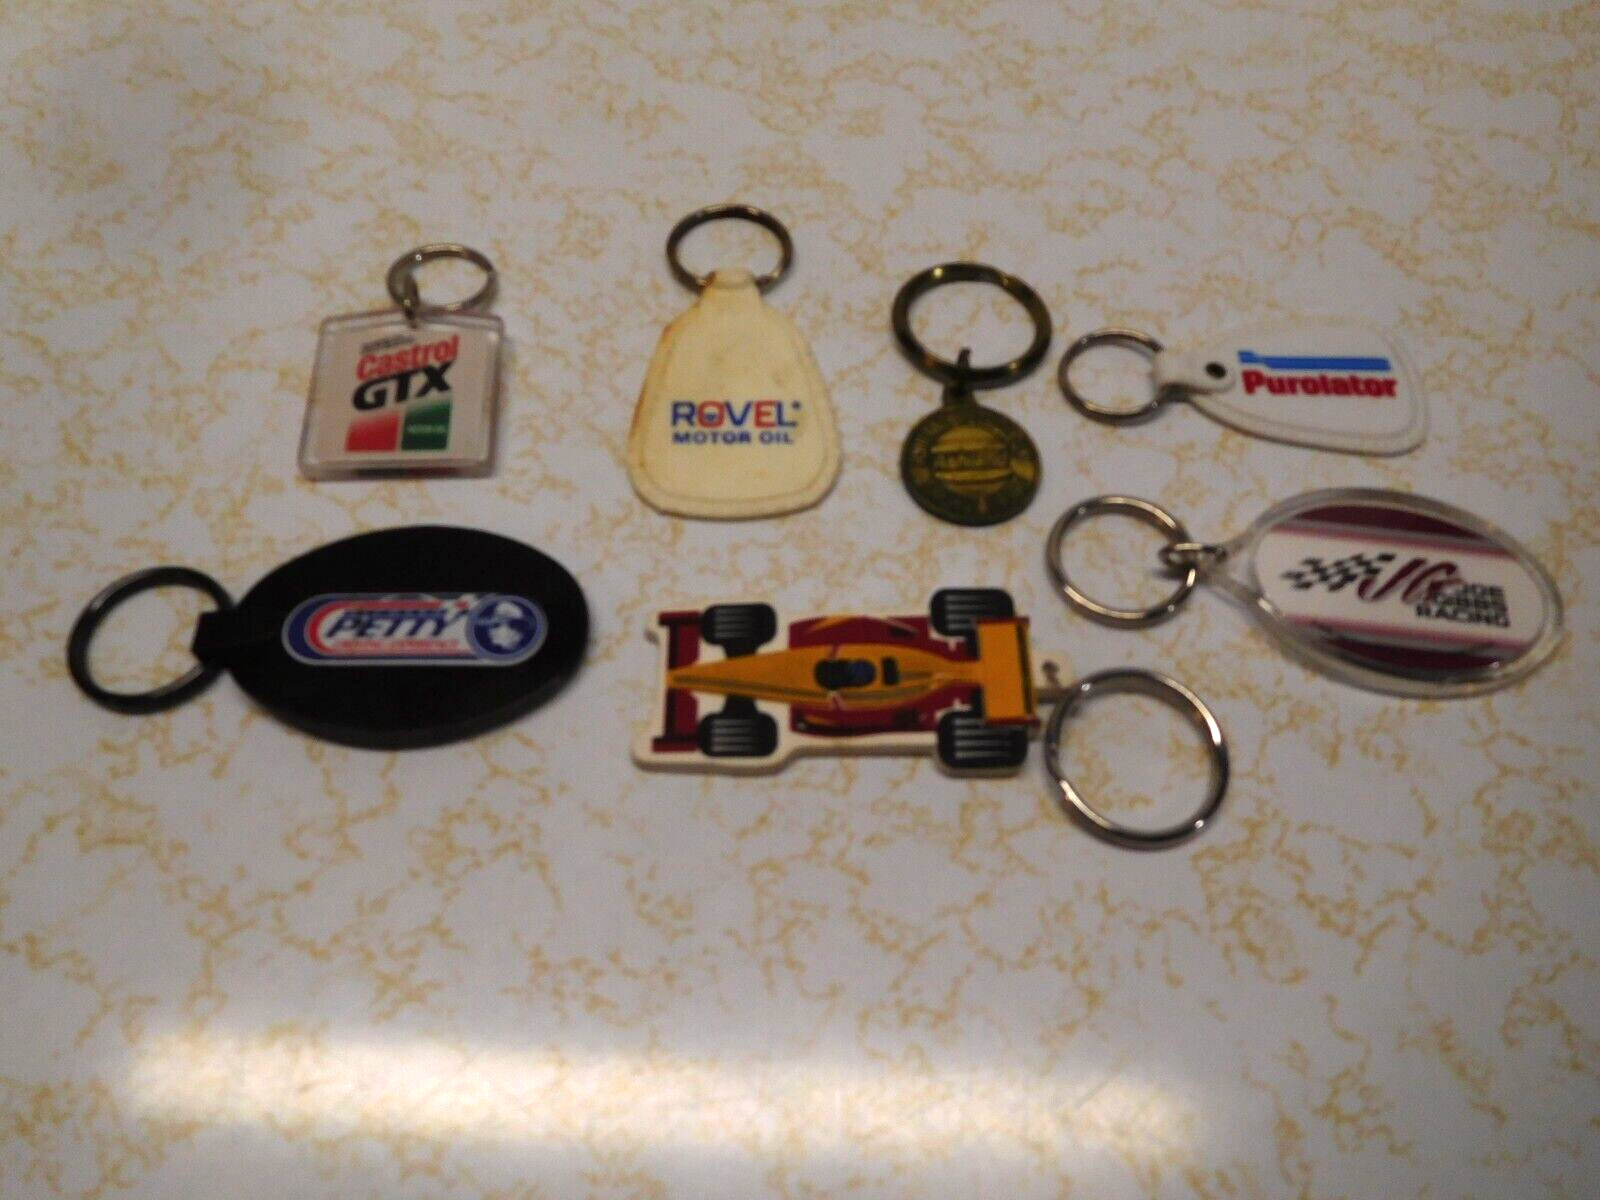 7 Vintage Gas/Oil/Racing Advertising Keychains ~ Petty, GTX, Rovel, Purolator